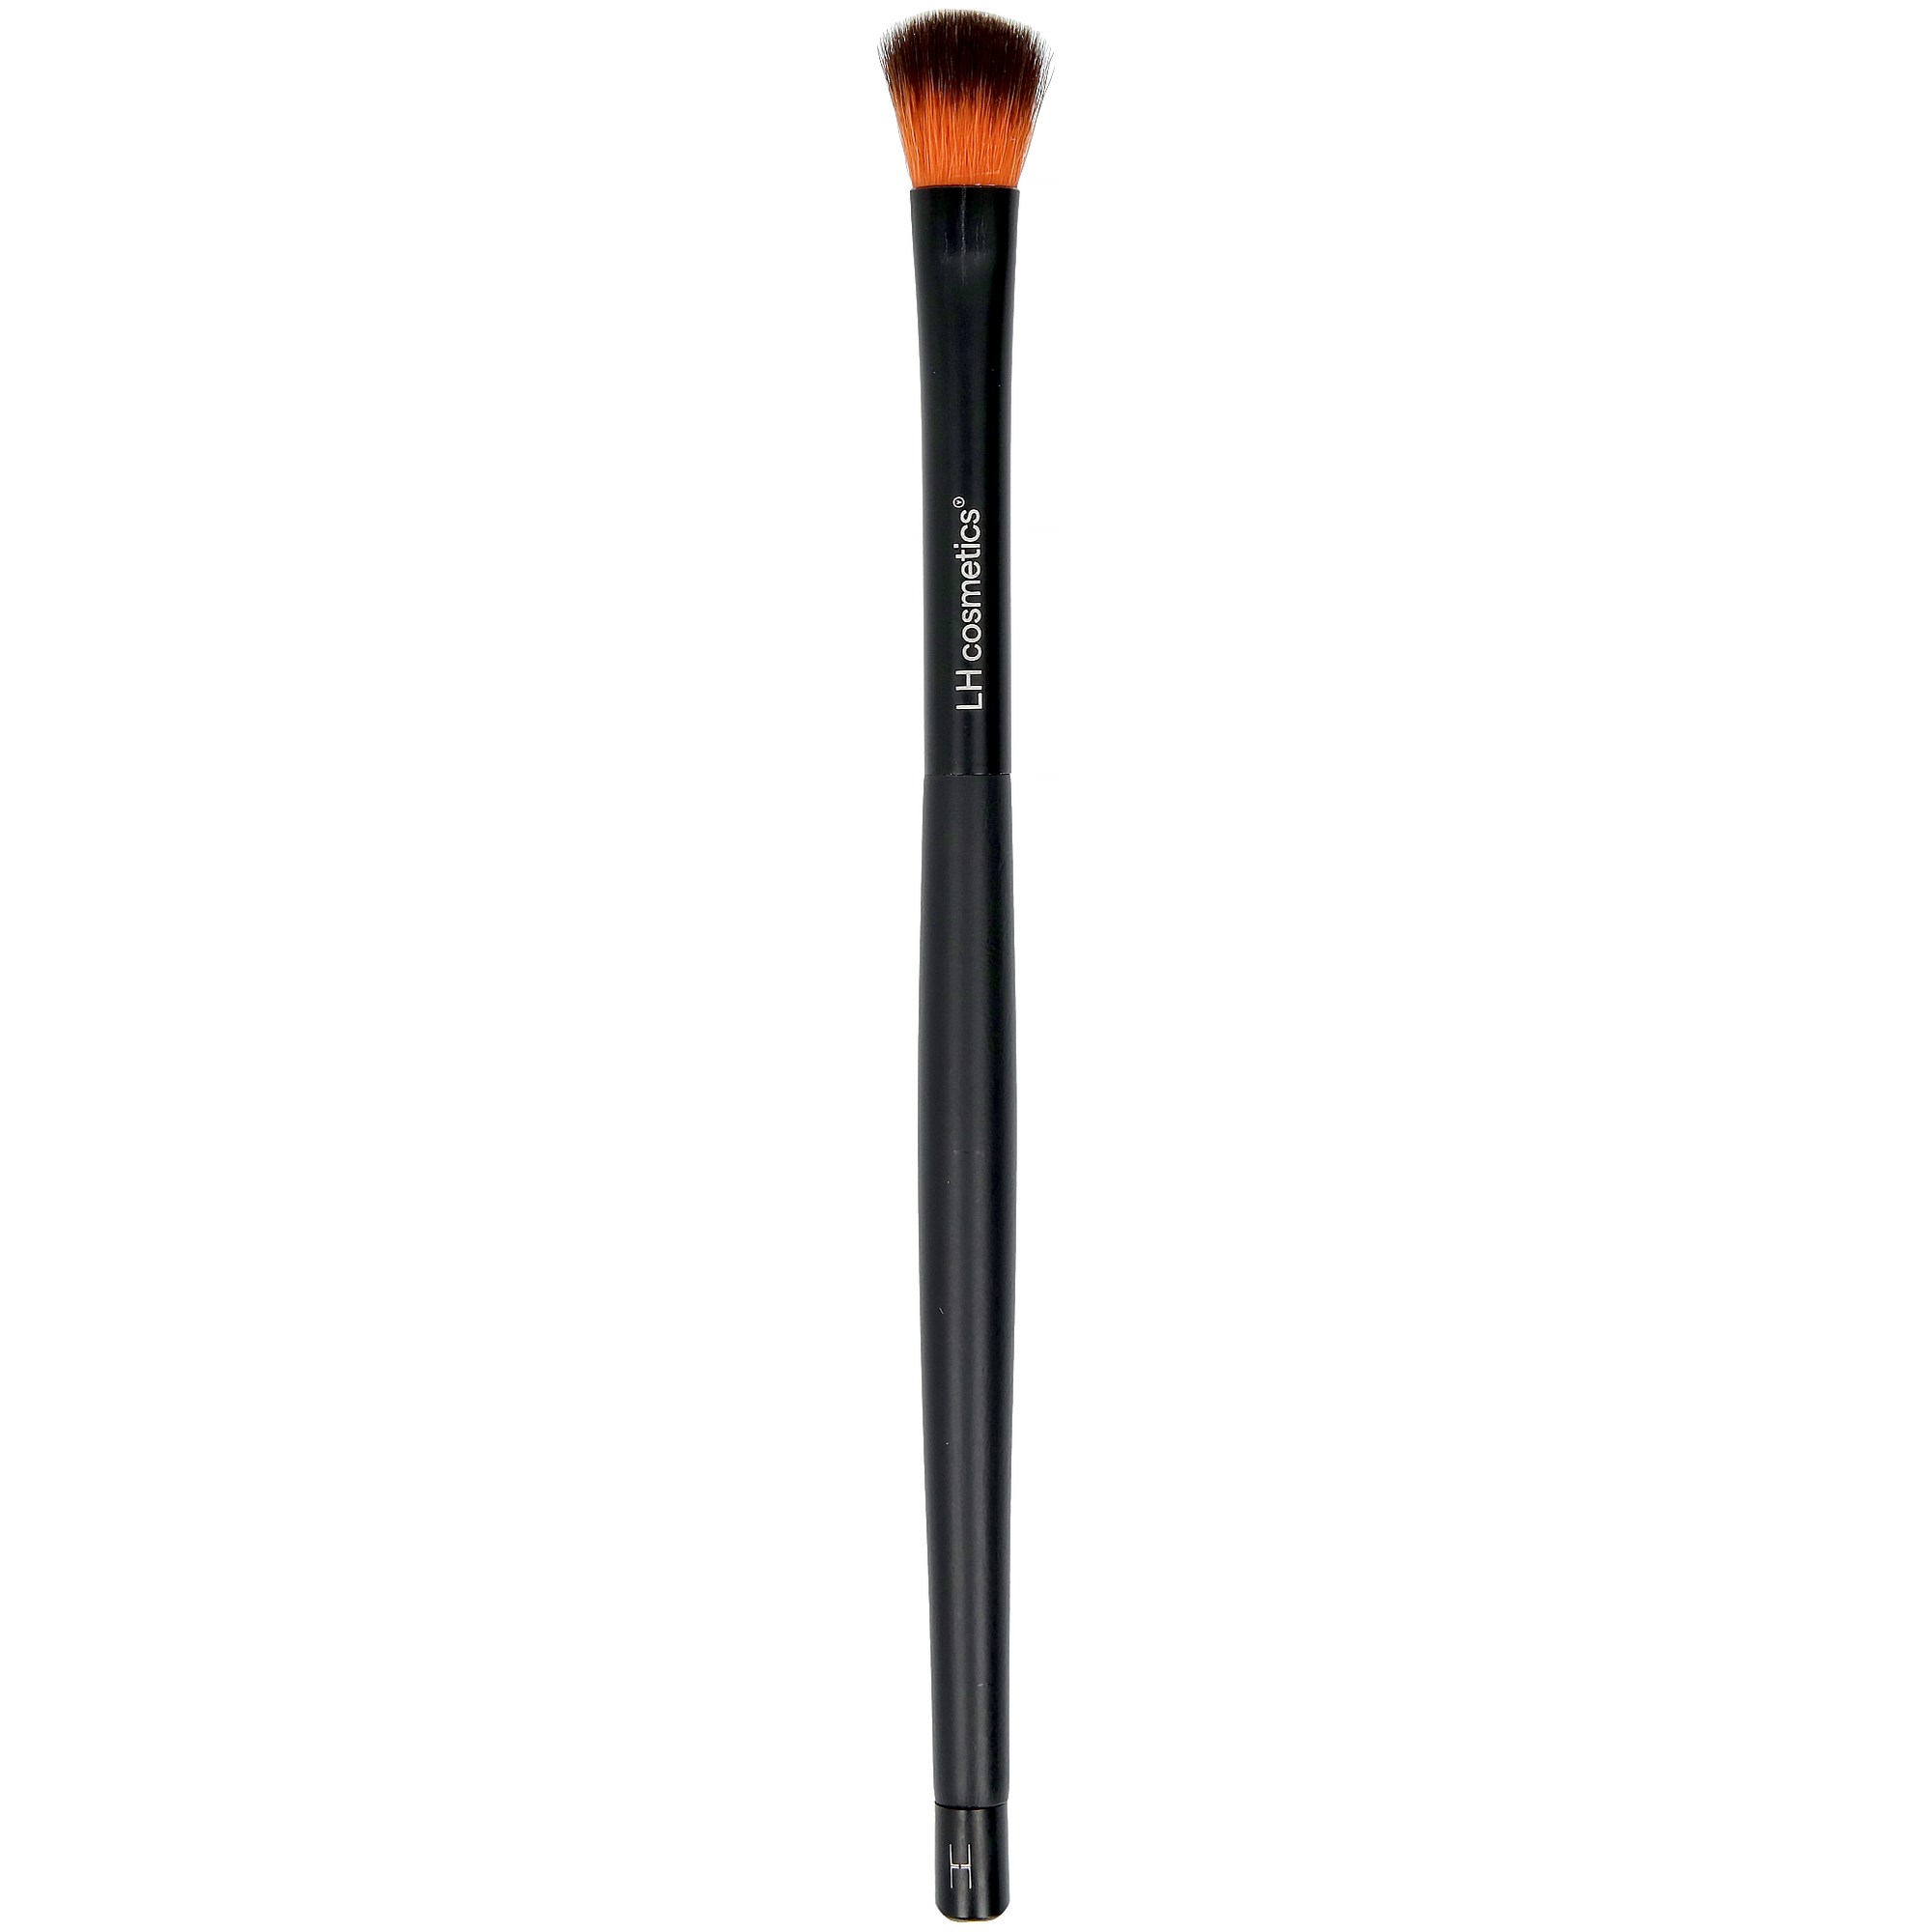 Läs mer om LH cosmetics Brushes & Tools Blending Brush